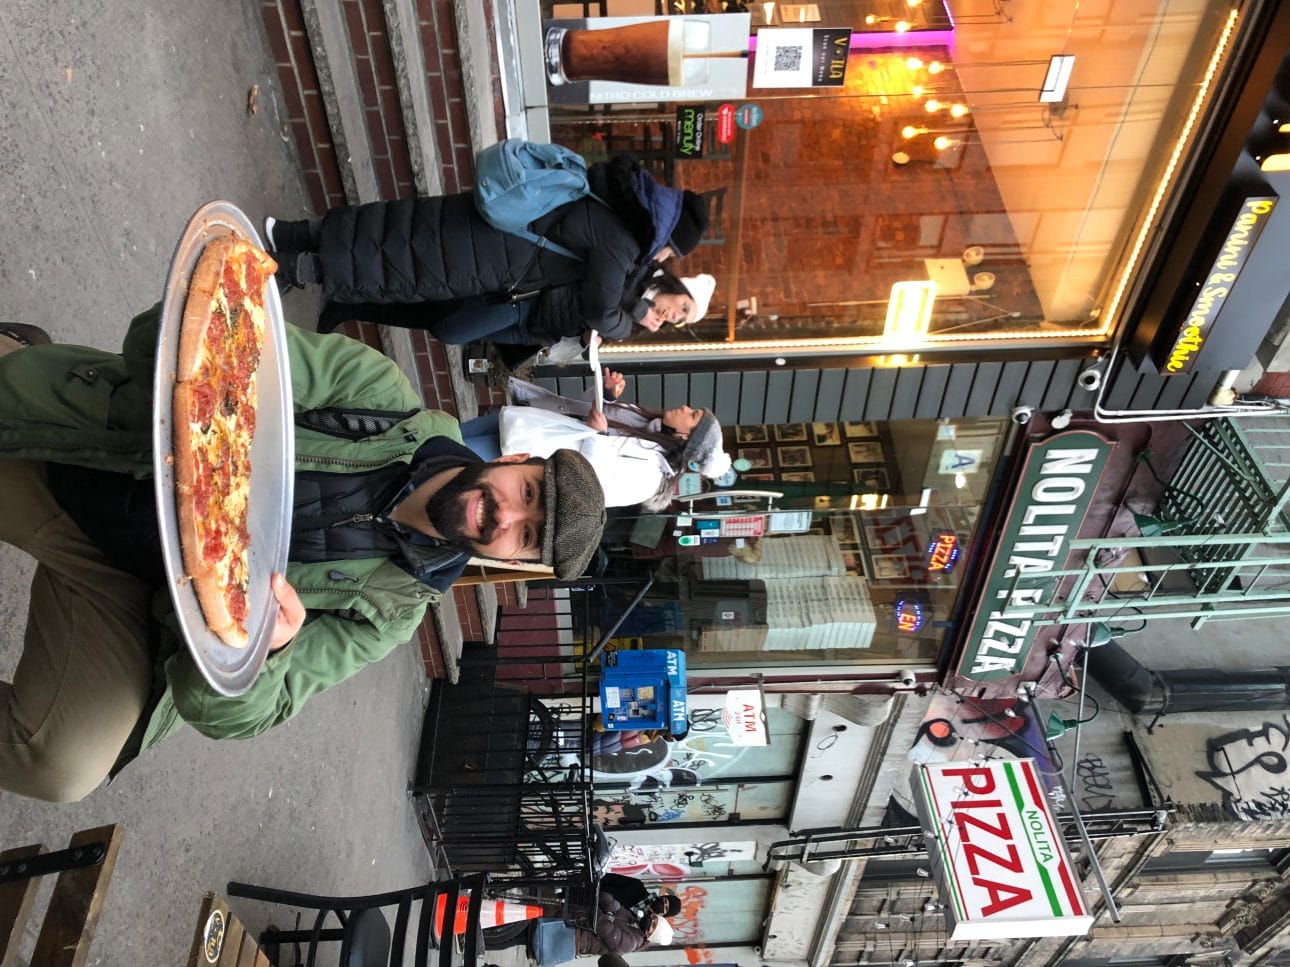 NYC Food Tour